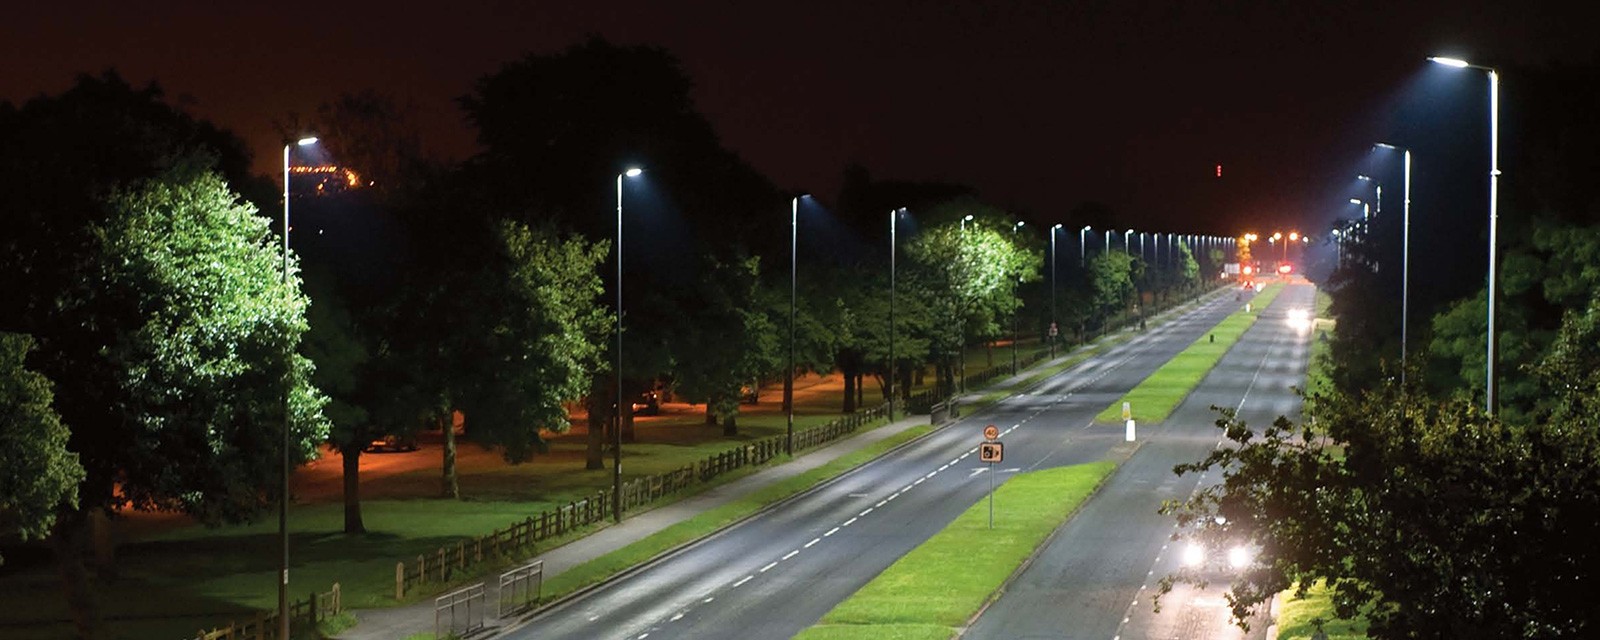 Canberra, Australia LED street lamp renovation project